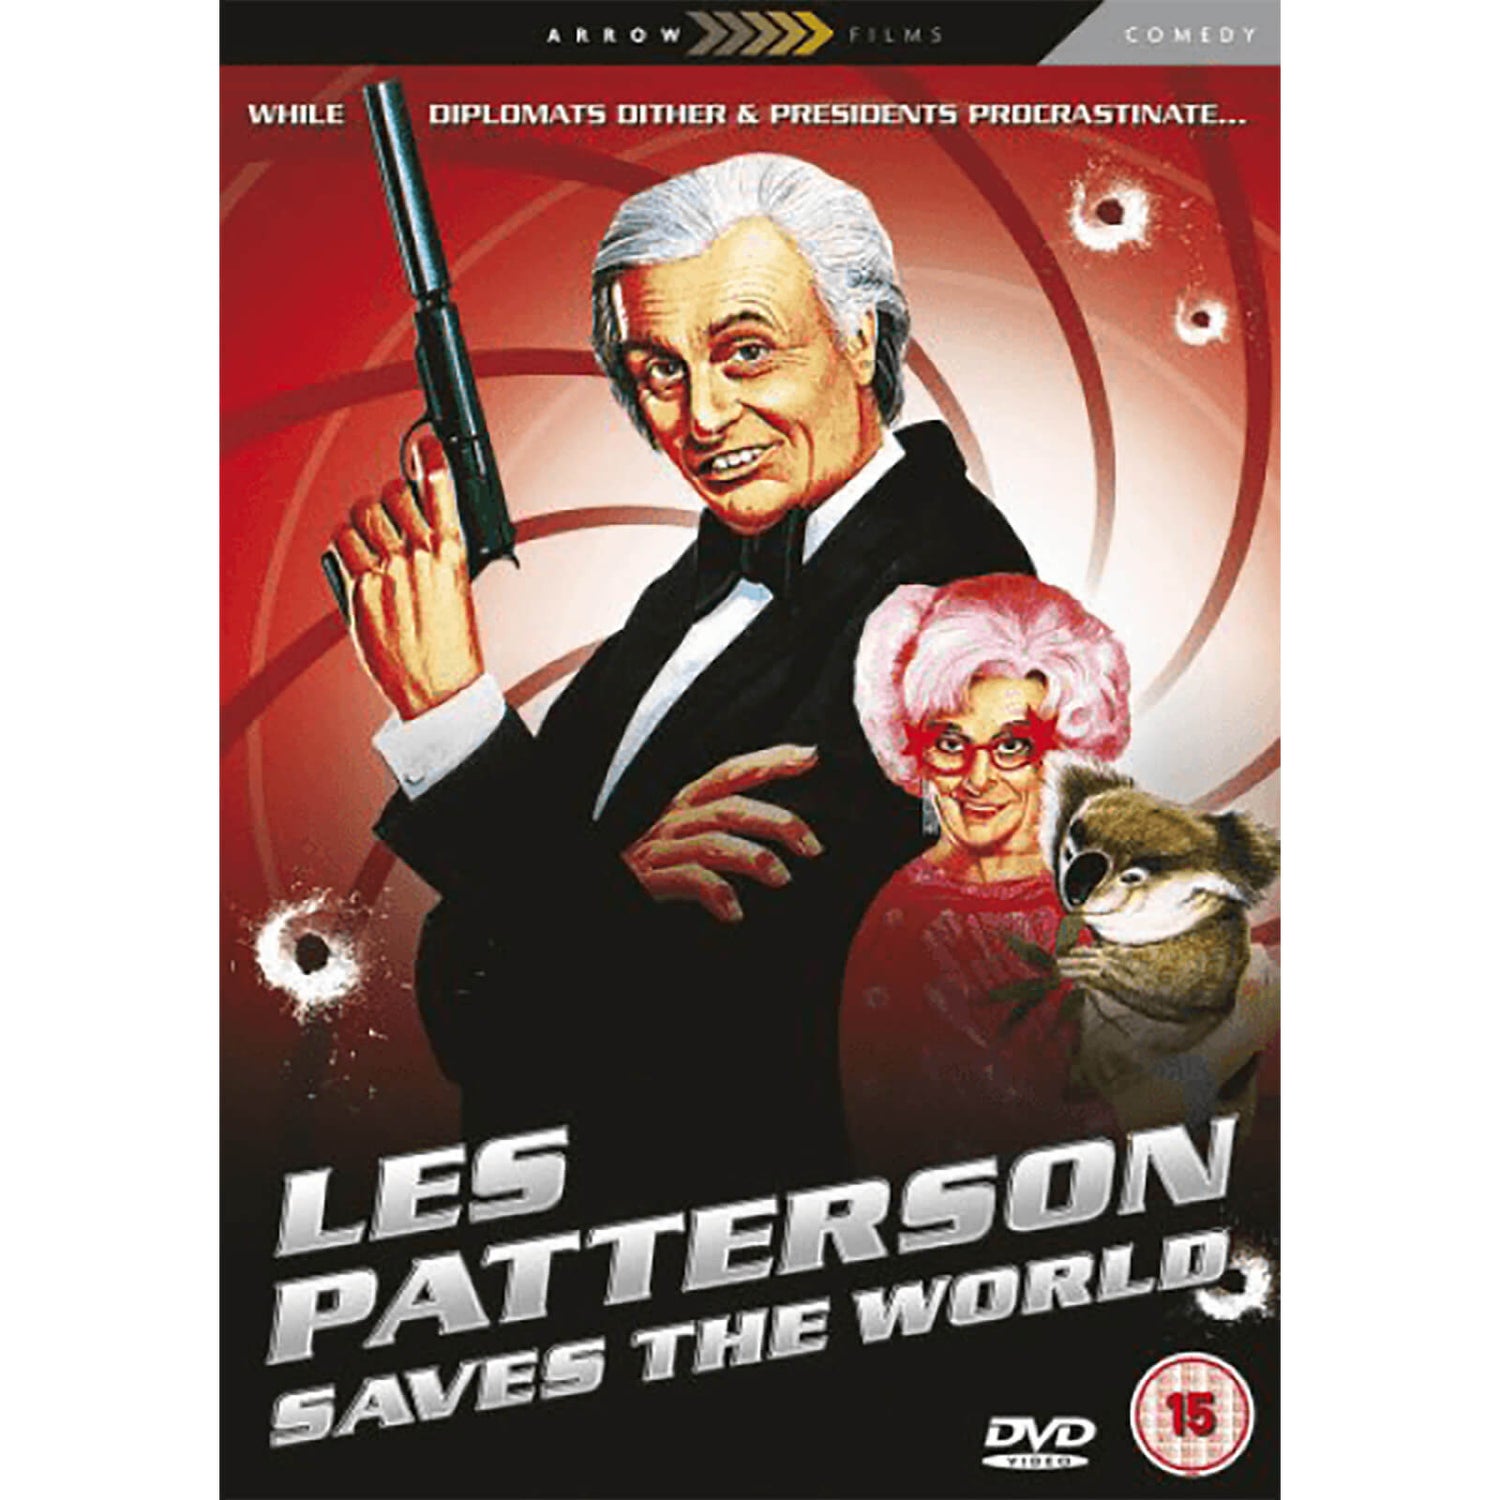 Les Patterson Saves World